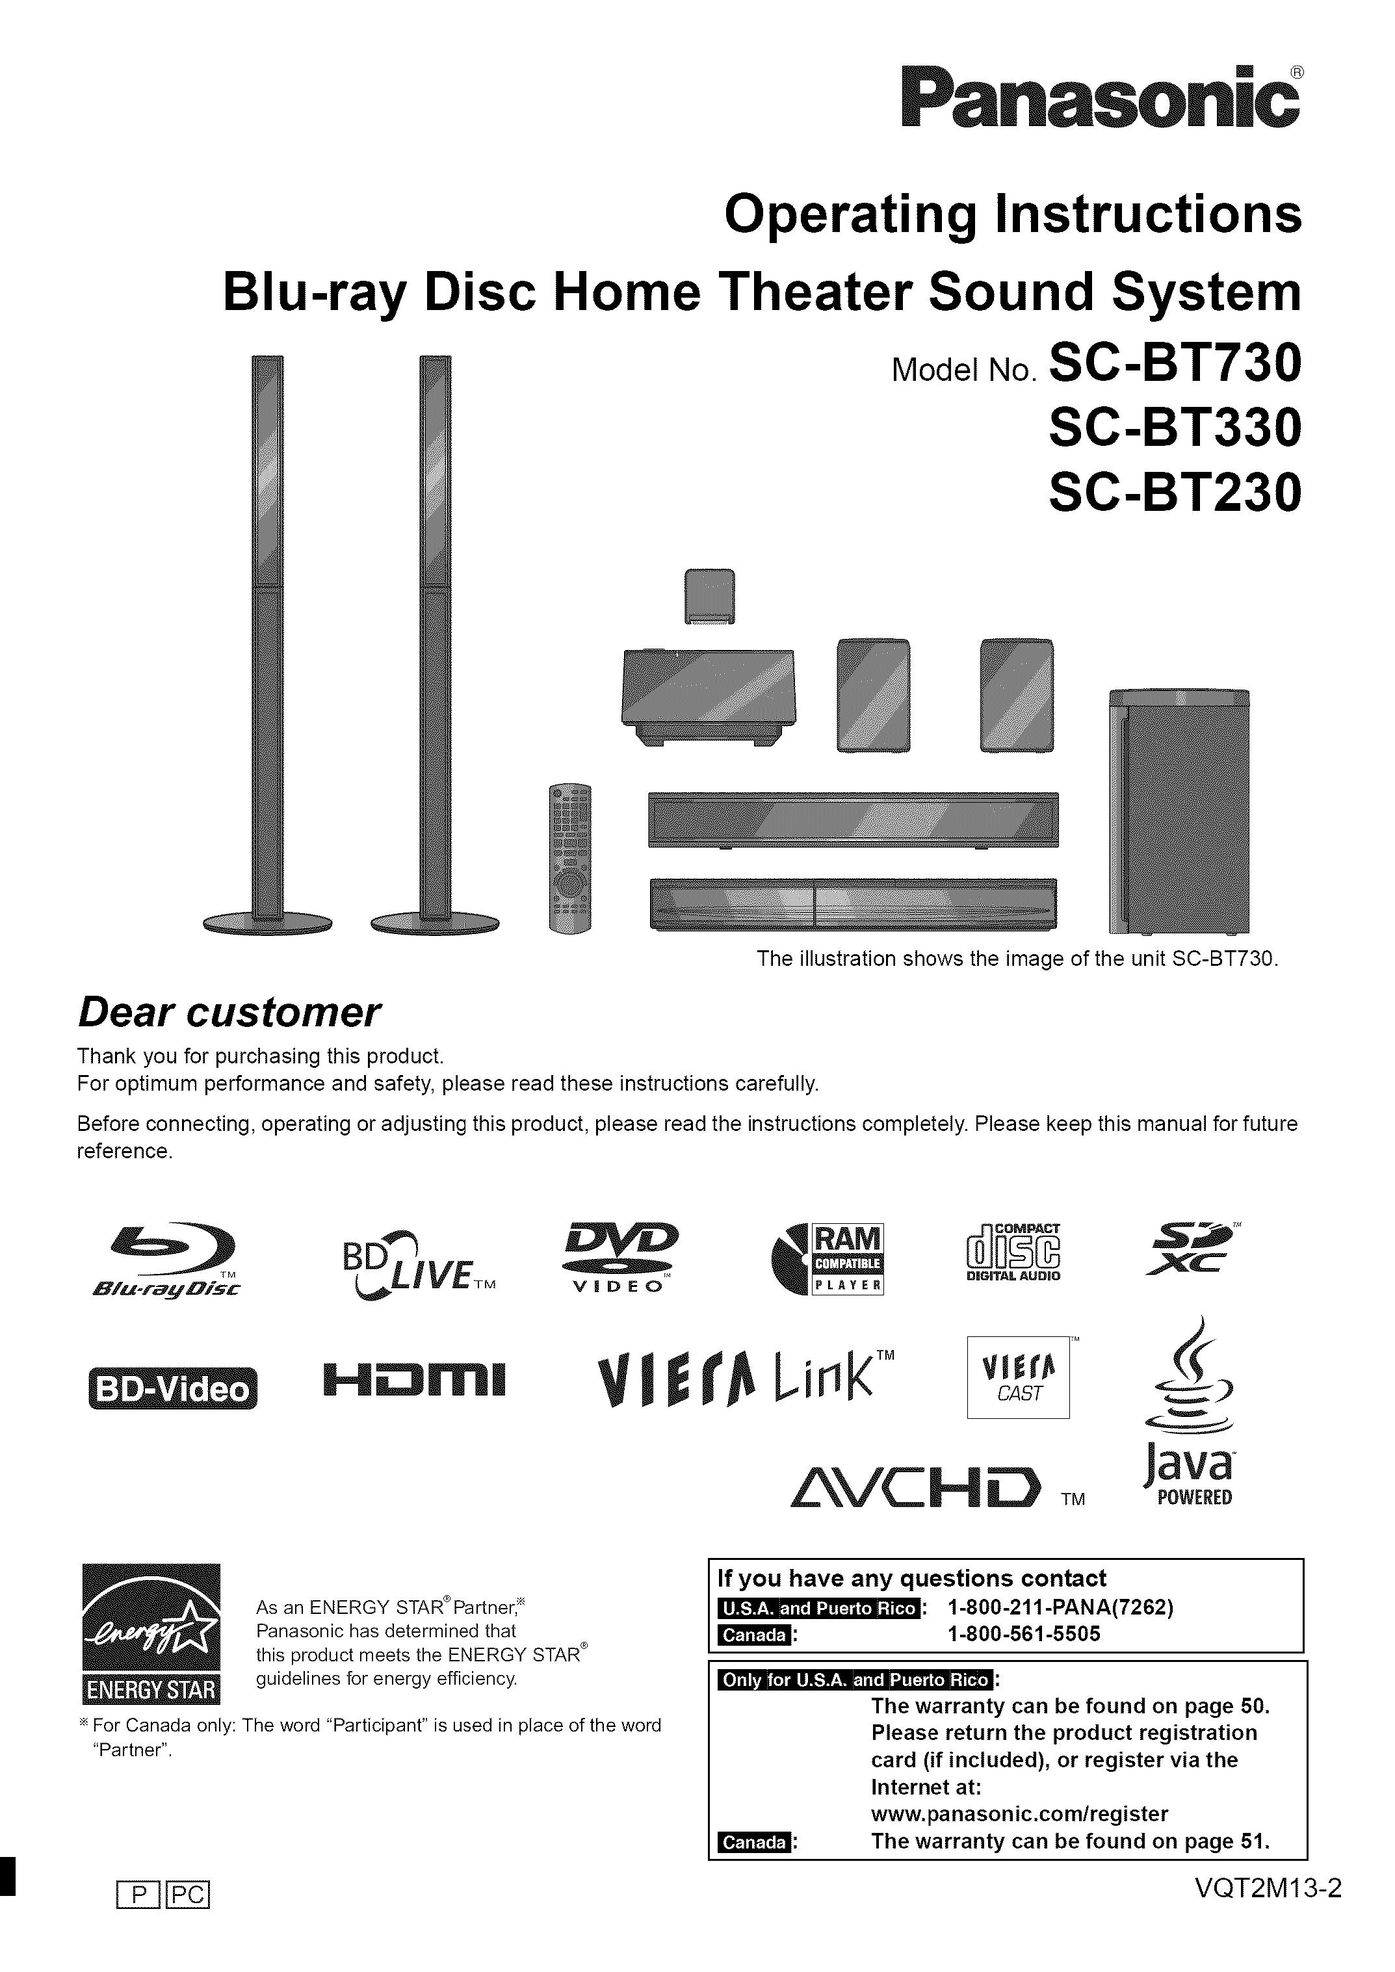 Panasonic SC-BT230 Home Theater System User Manual